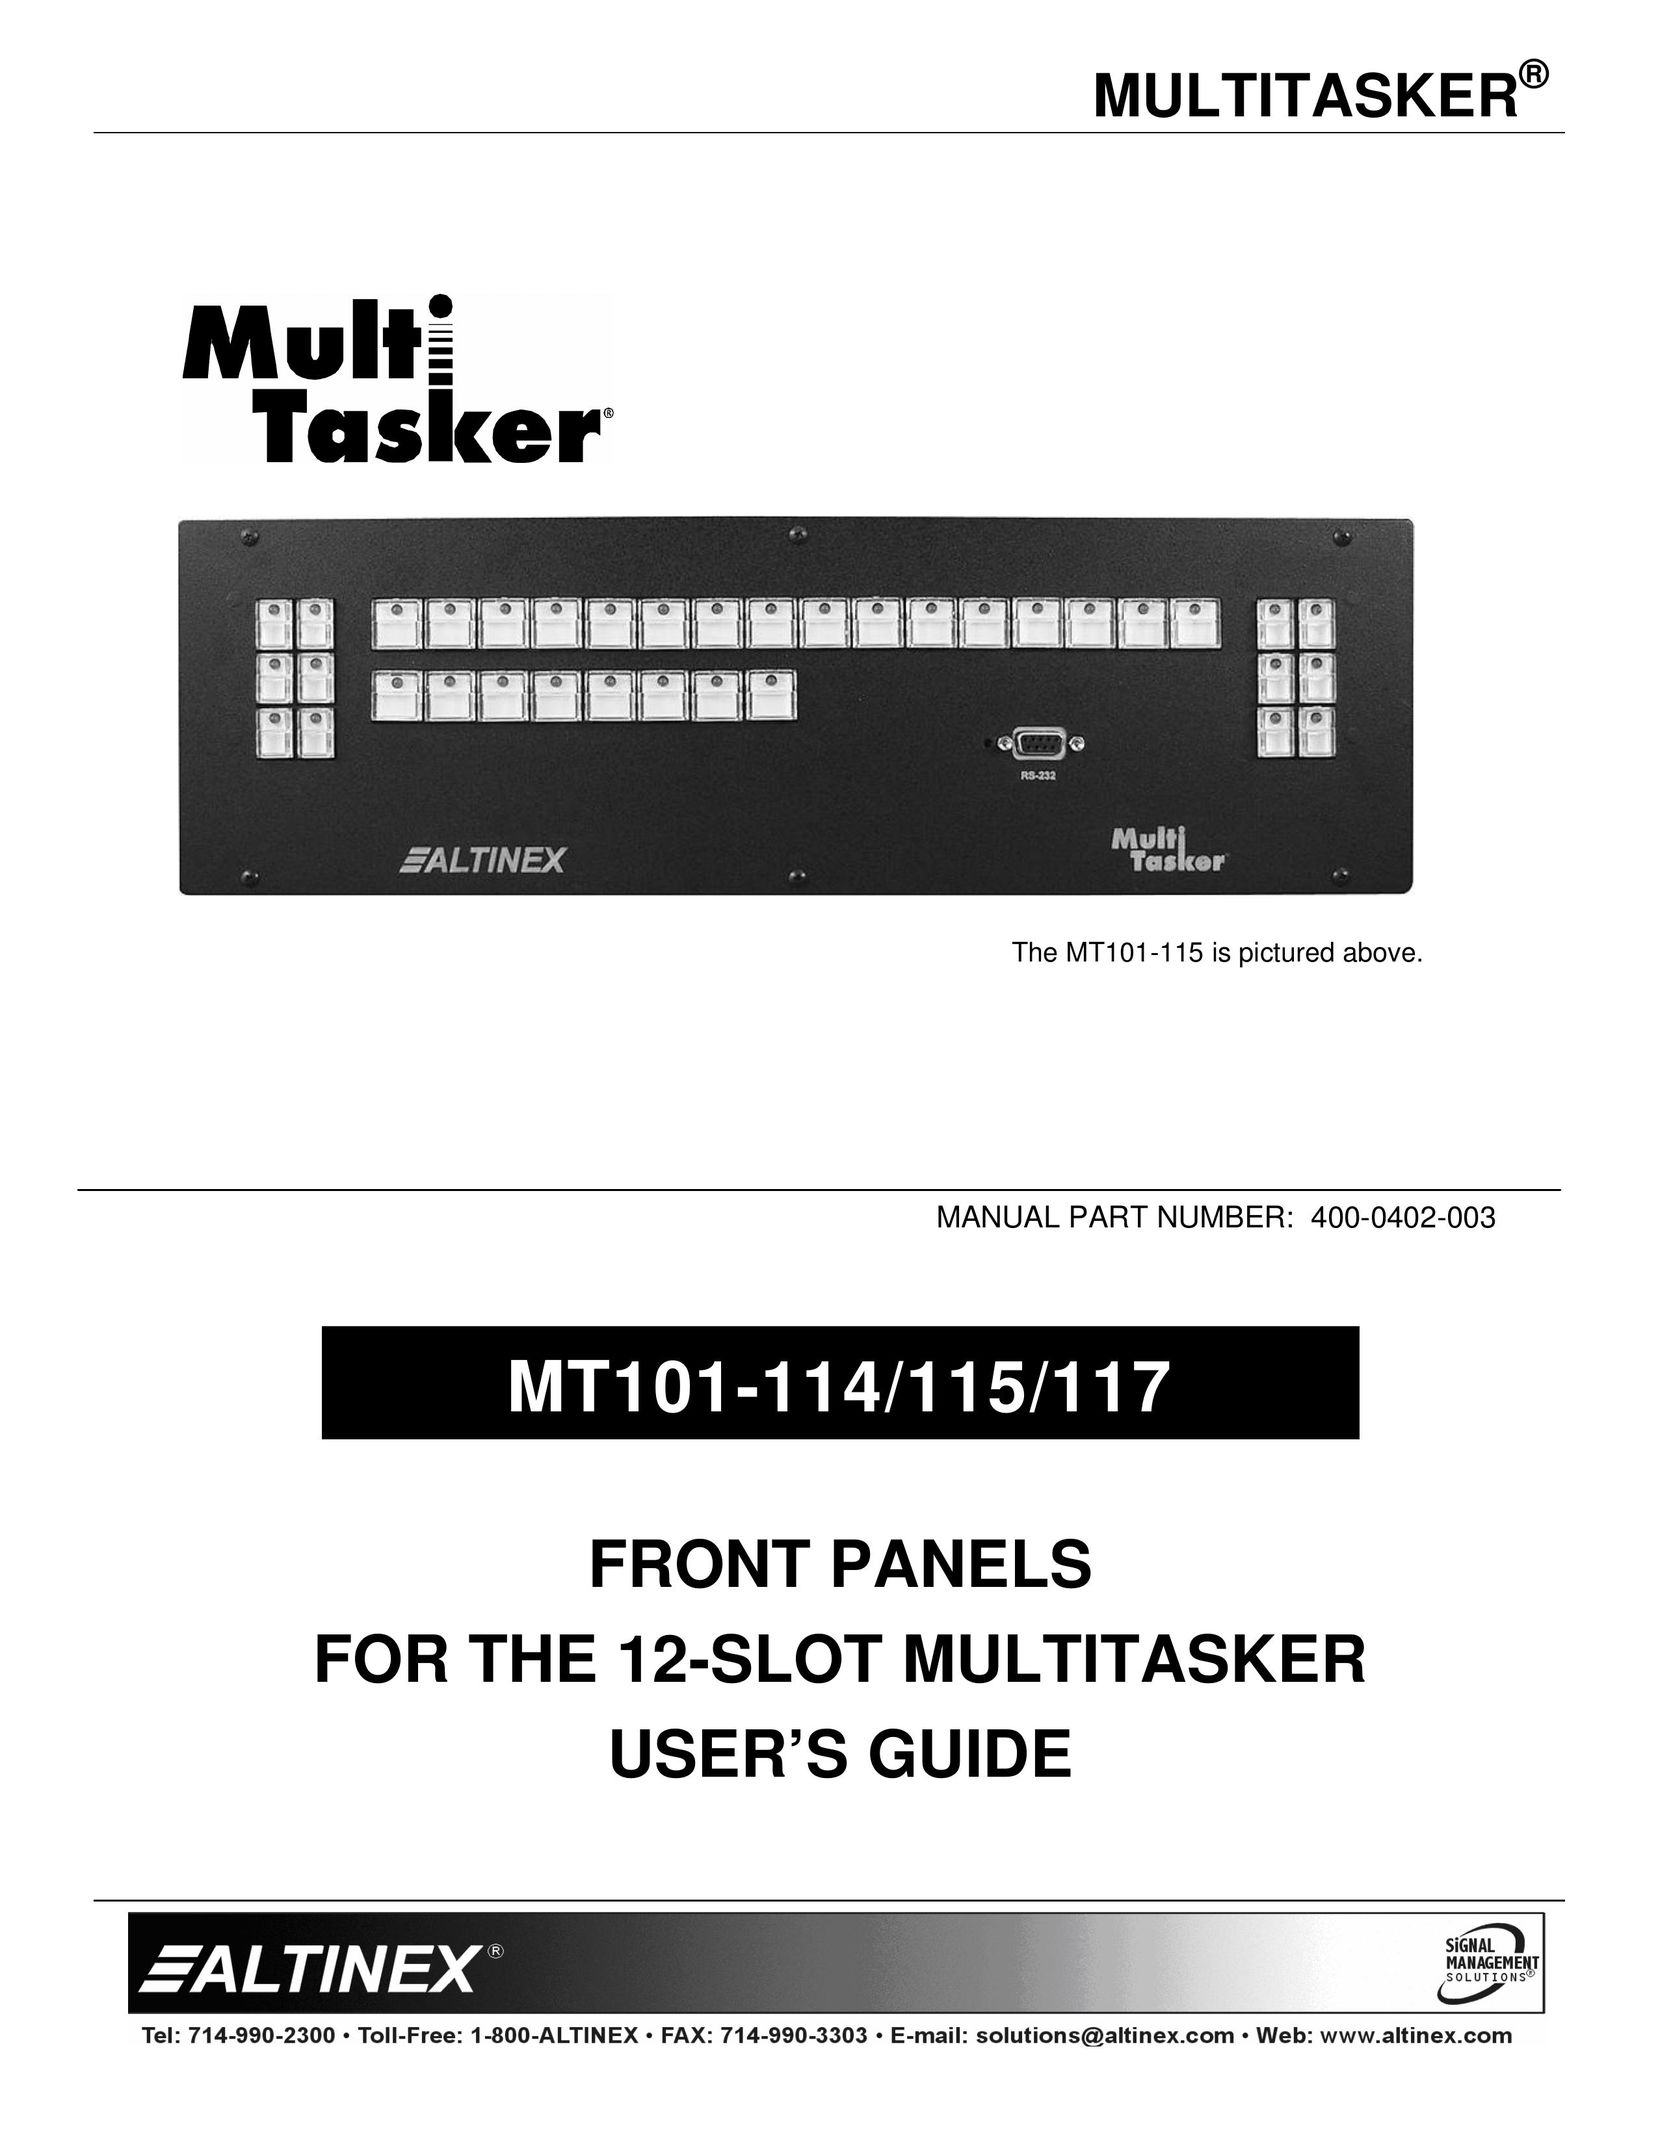 Altinex MT101-114 Network Card User Manual